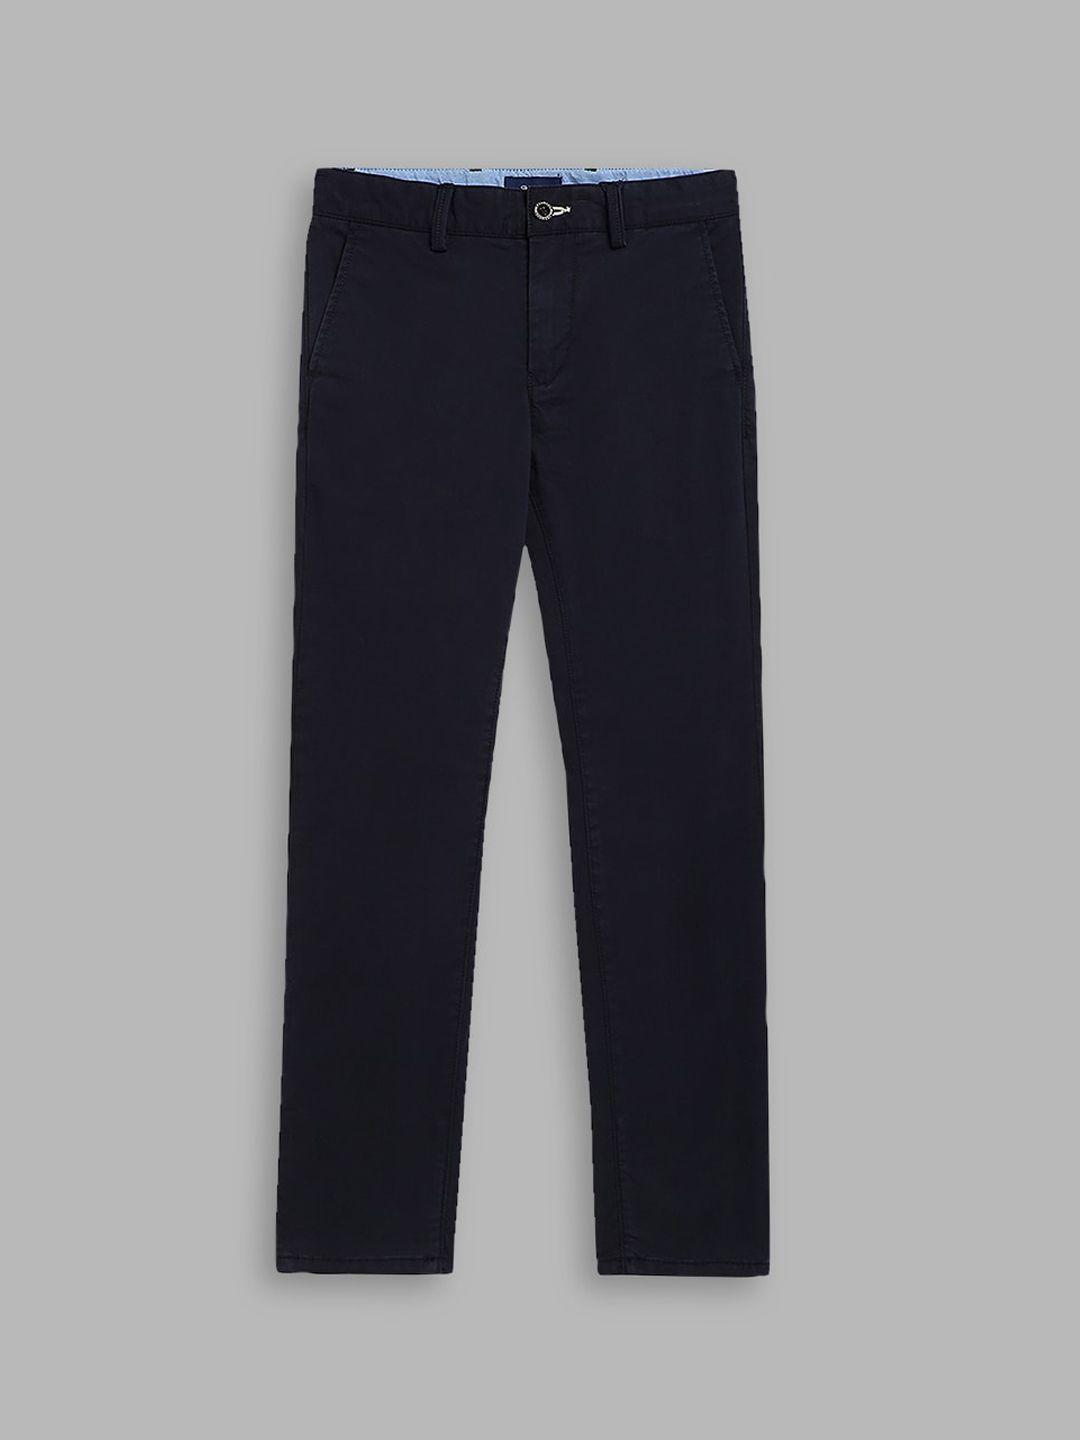 gant-boys-navy-blue-chinos-trousers